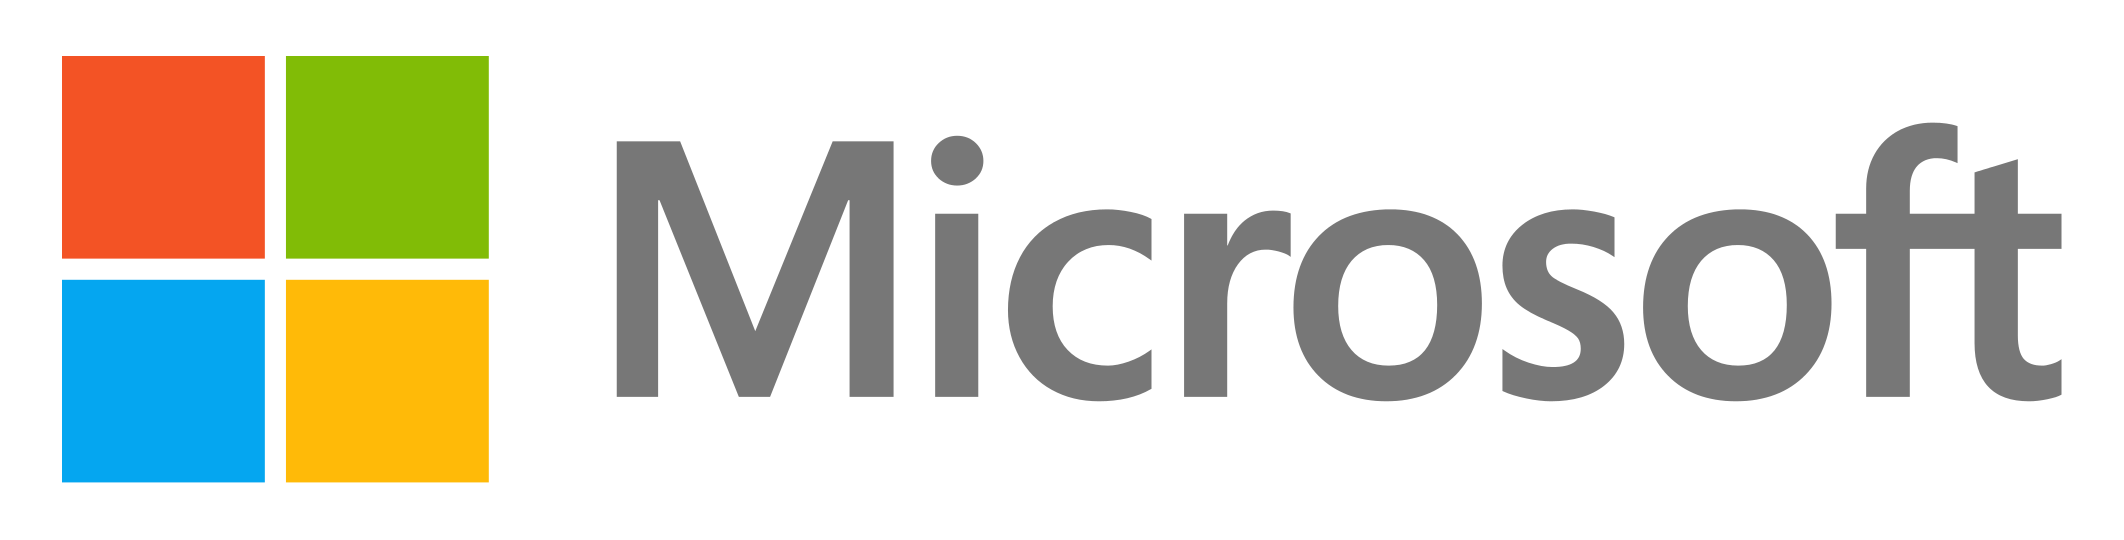 Microsoft Logo PNG Image